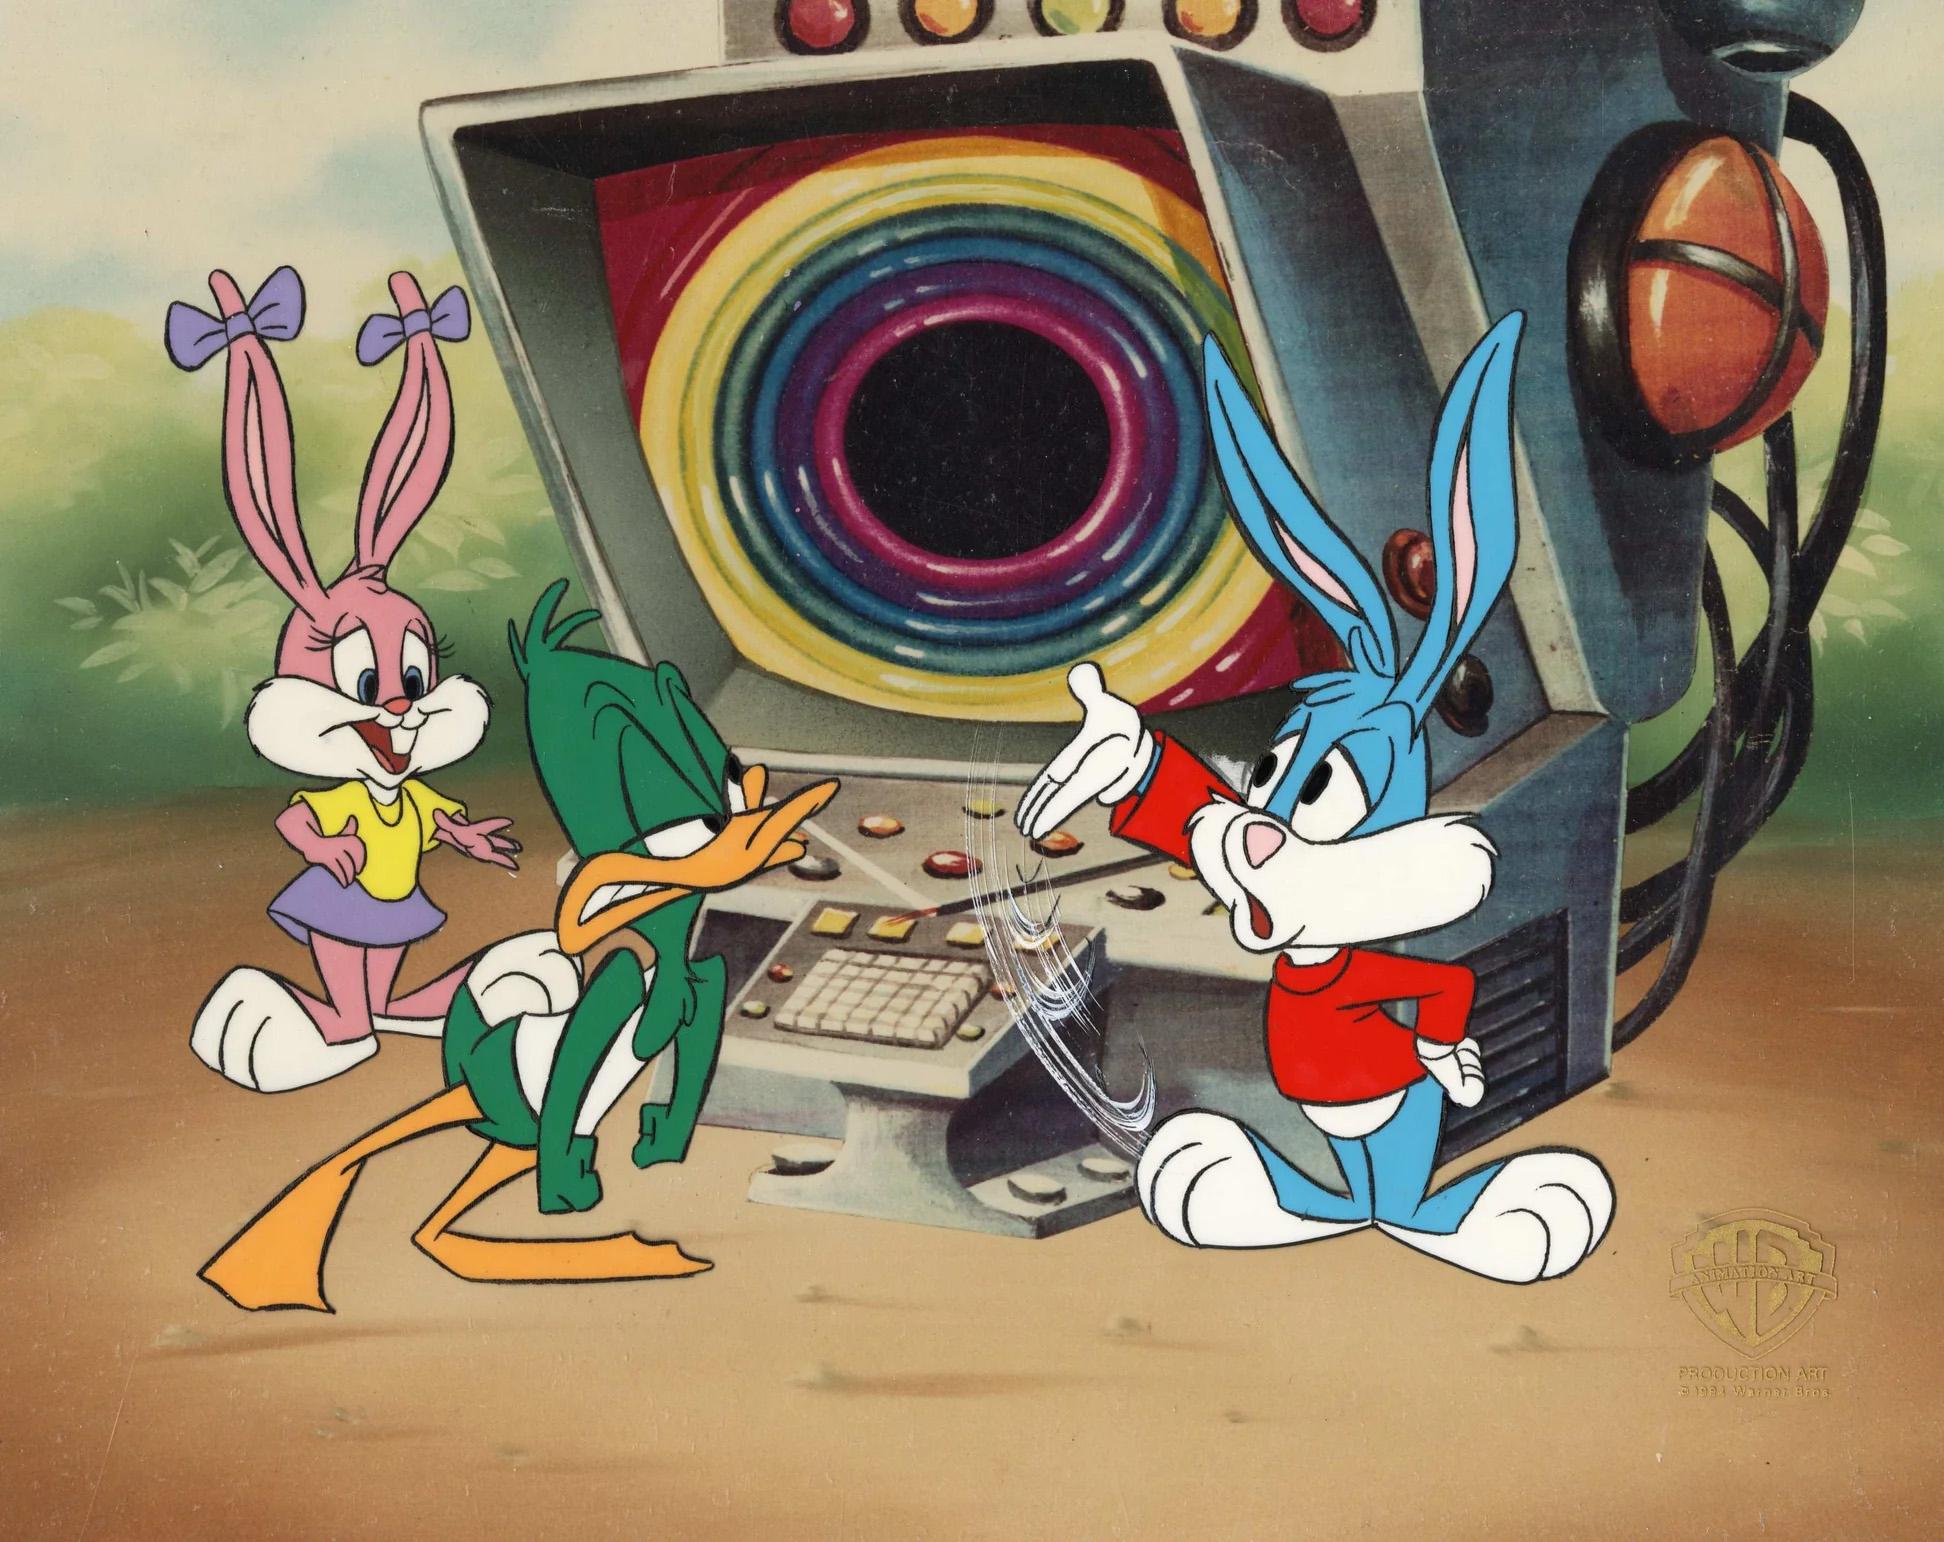 Tiny Toons Original Production Cel: Buster, Babs, Plucky Duck - Art by Warner Bros. Studio Artists